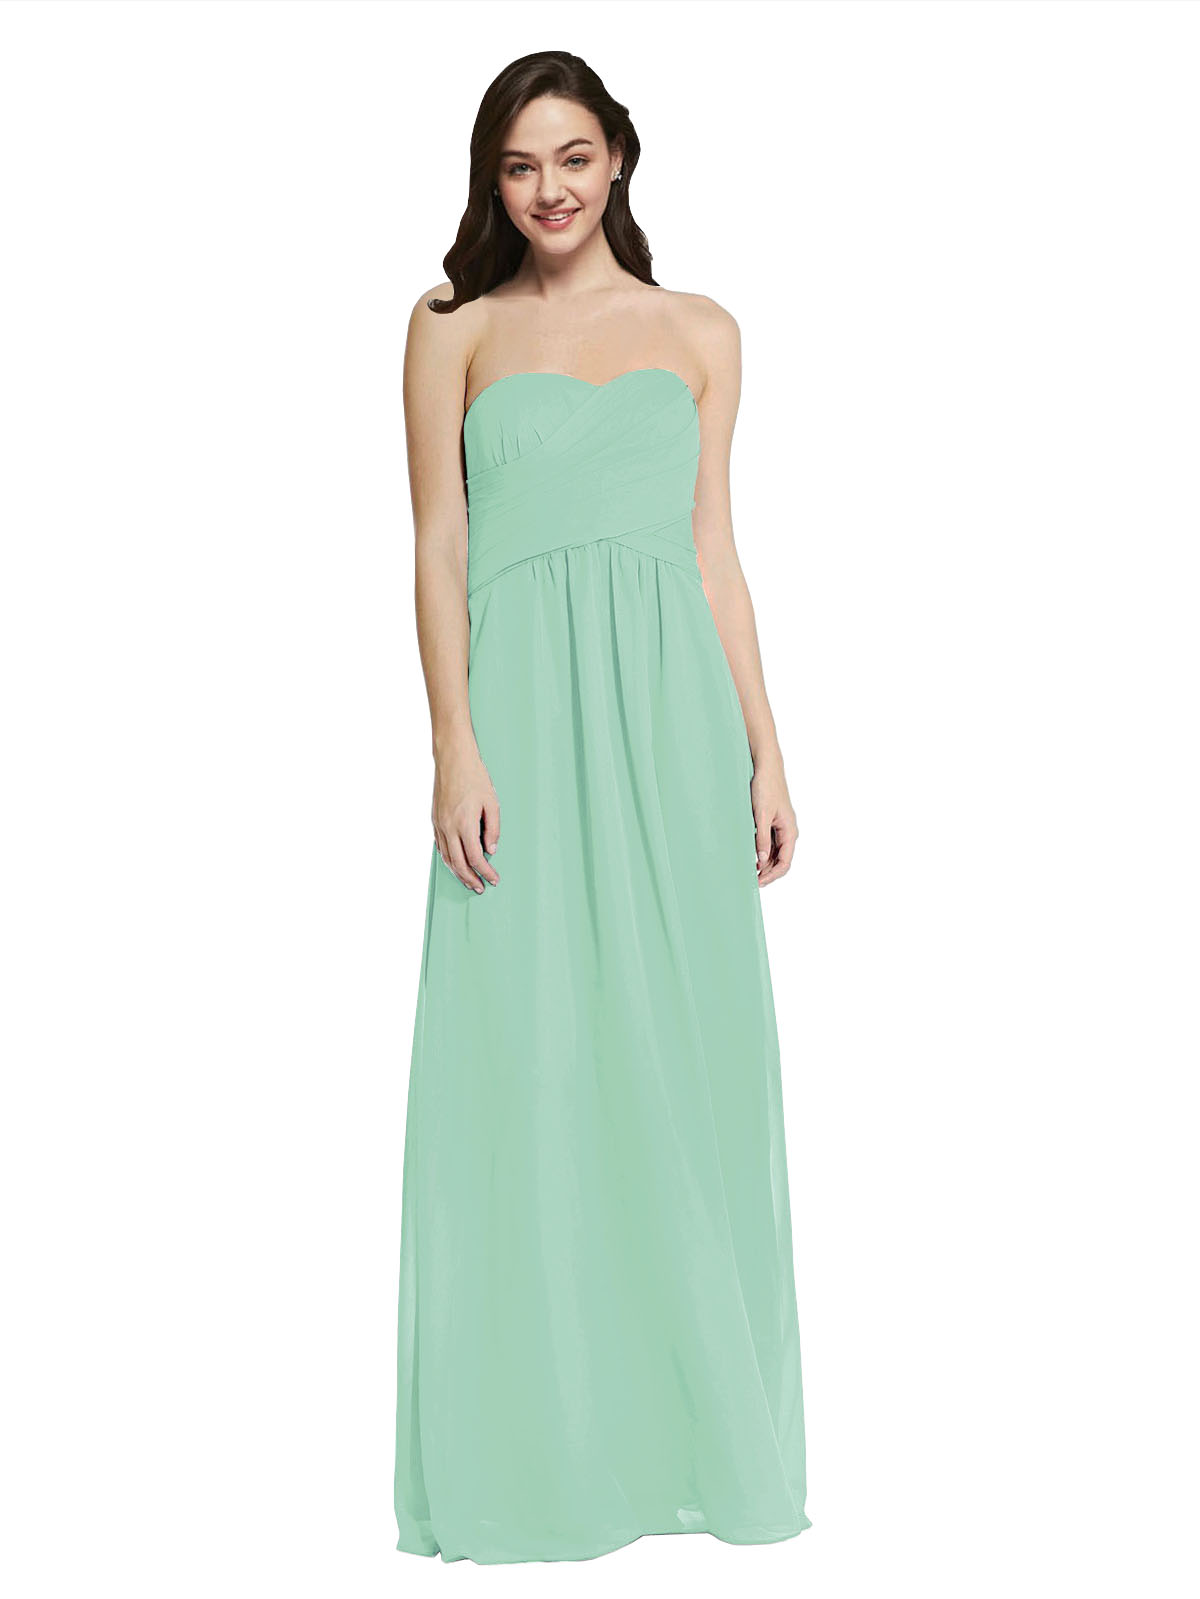 Long A-Line Strapless Sweetheart Sleeveless Mint Green Chiffon Bridesmaid Dress Jenner